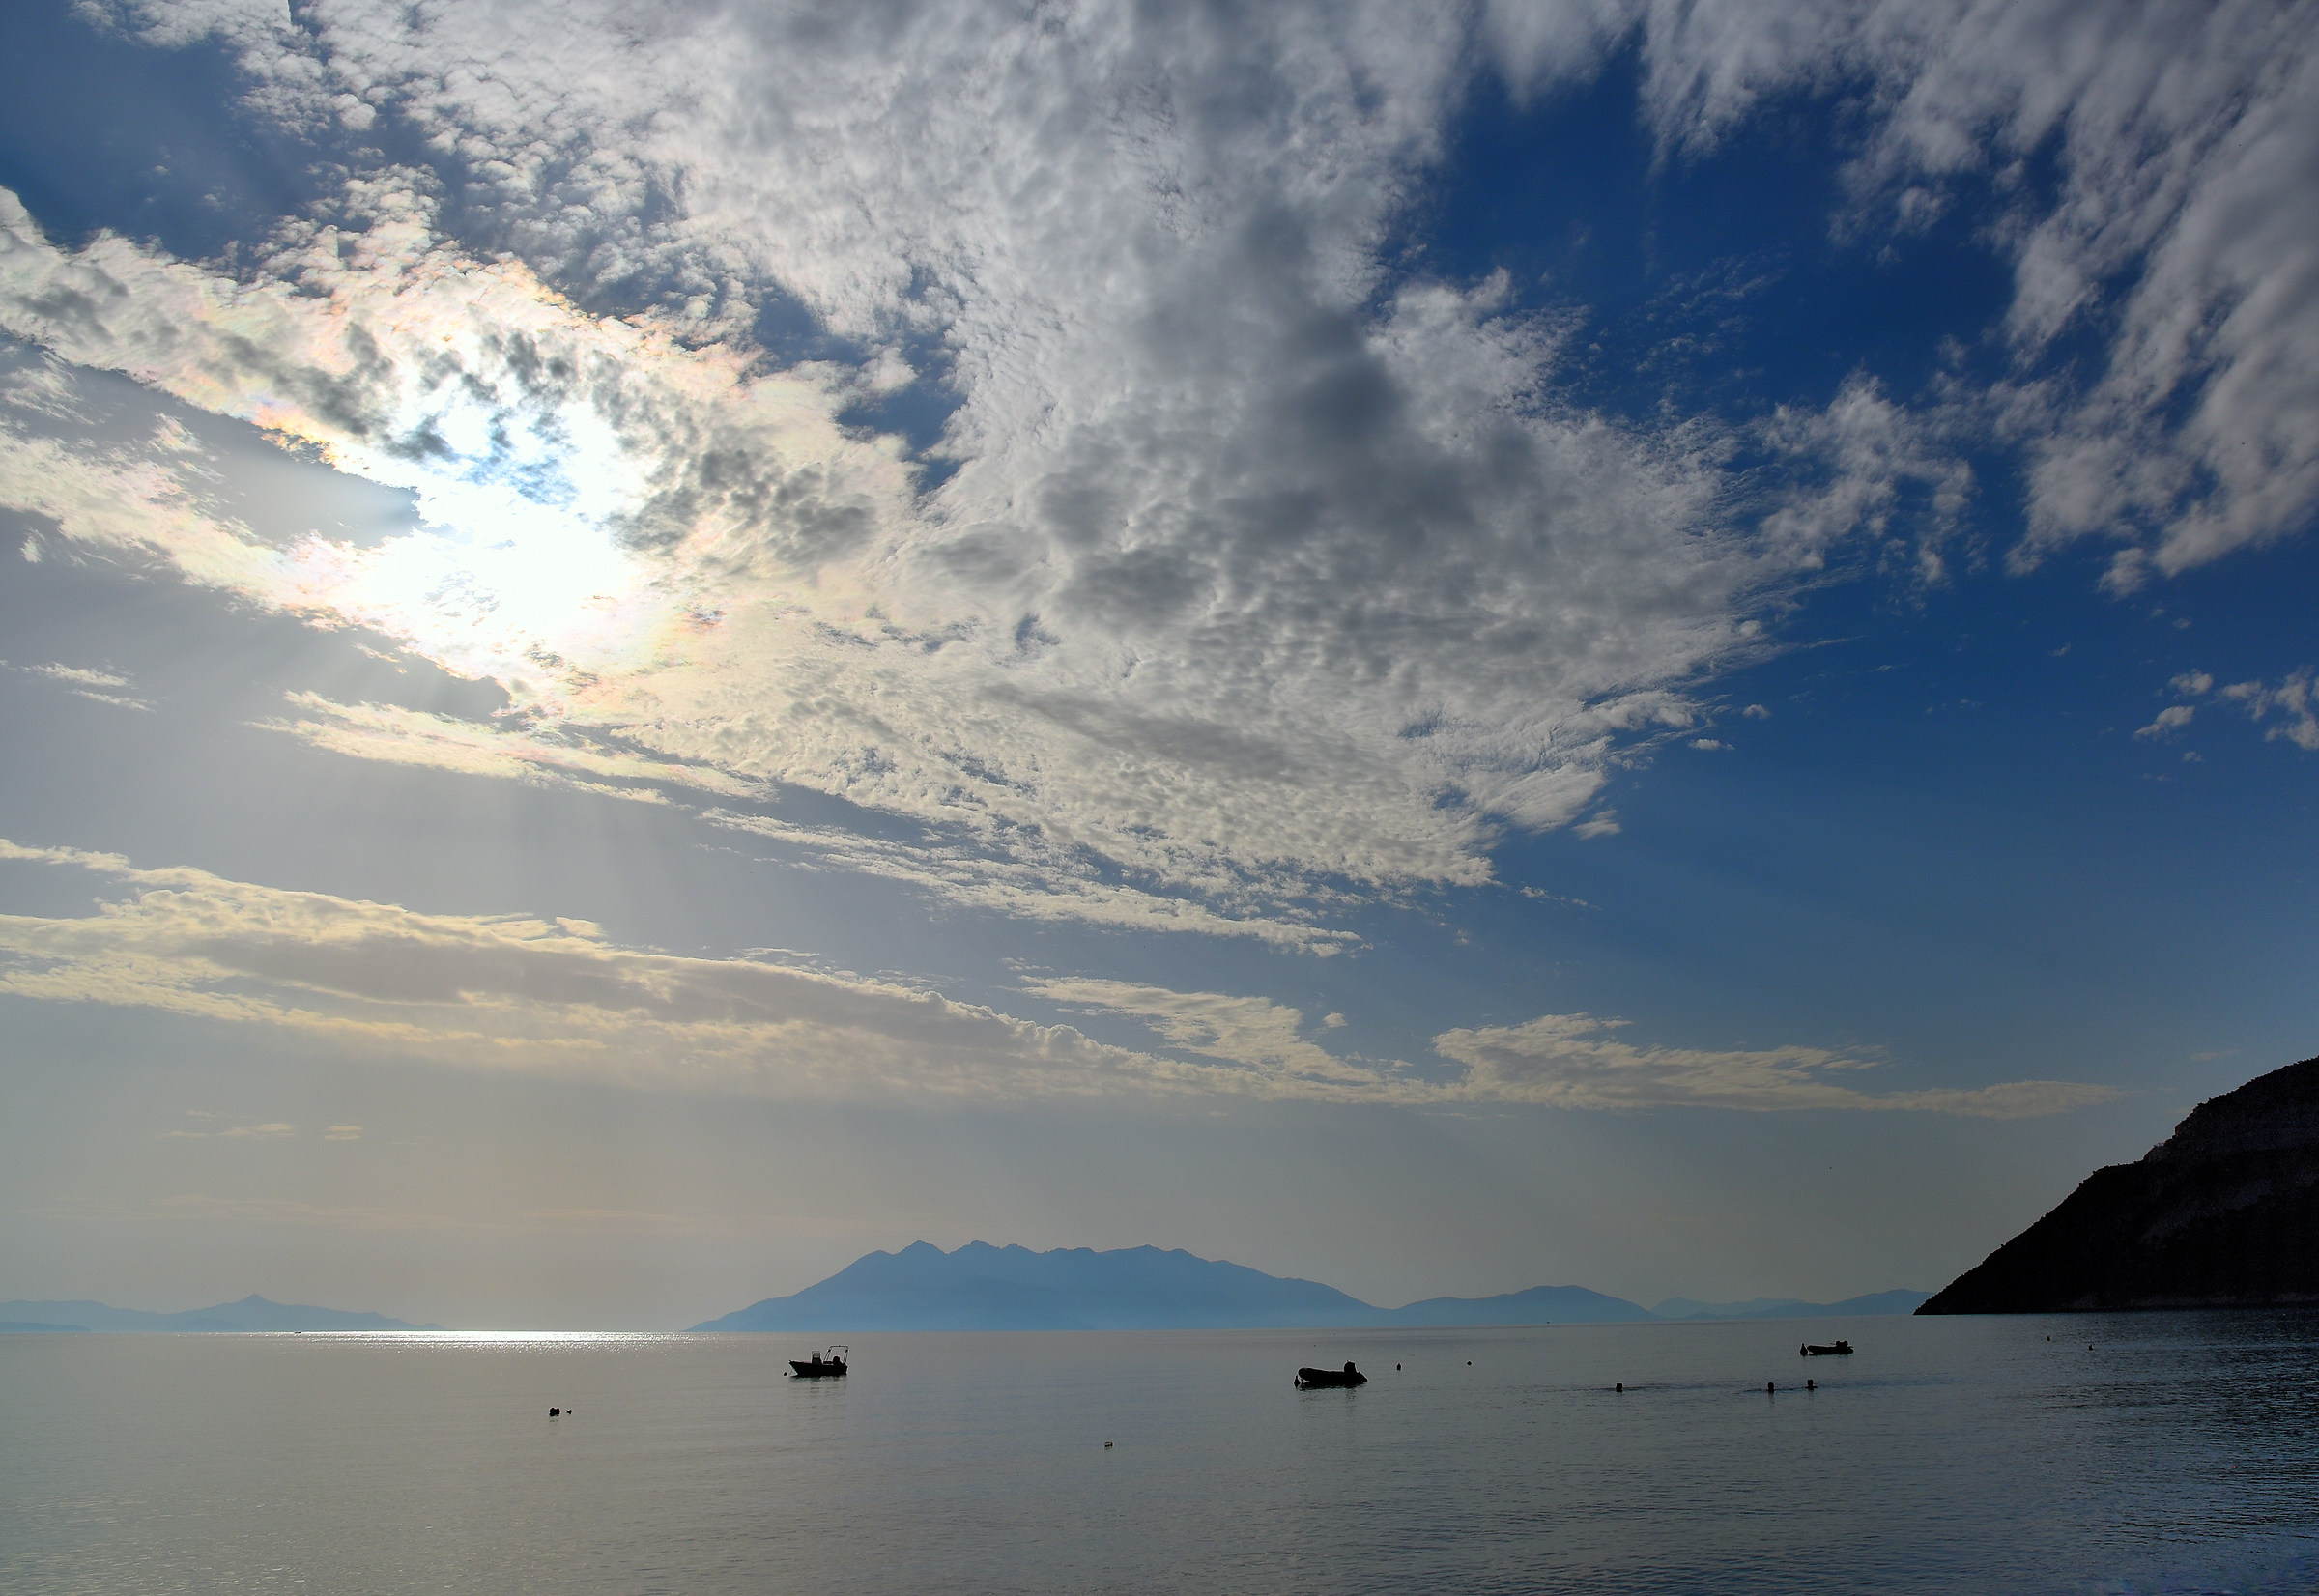 The calm Sea of Greece ...